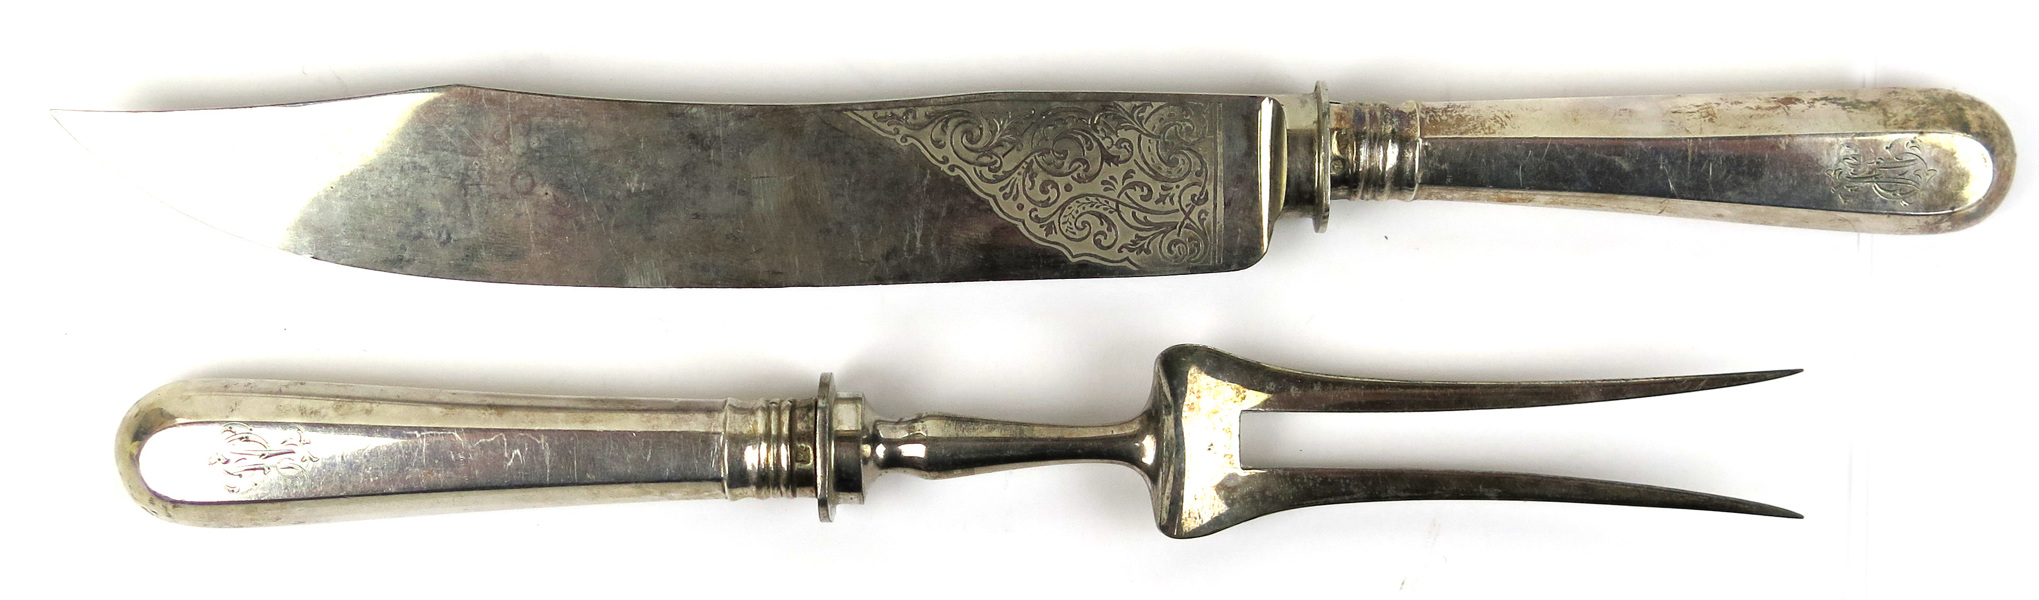 Trancherbestick, 1 par, silver med stålblad, Ryssland, 1800-tal, _4101a_lg.jpeg